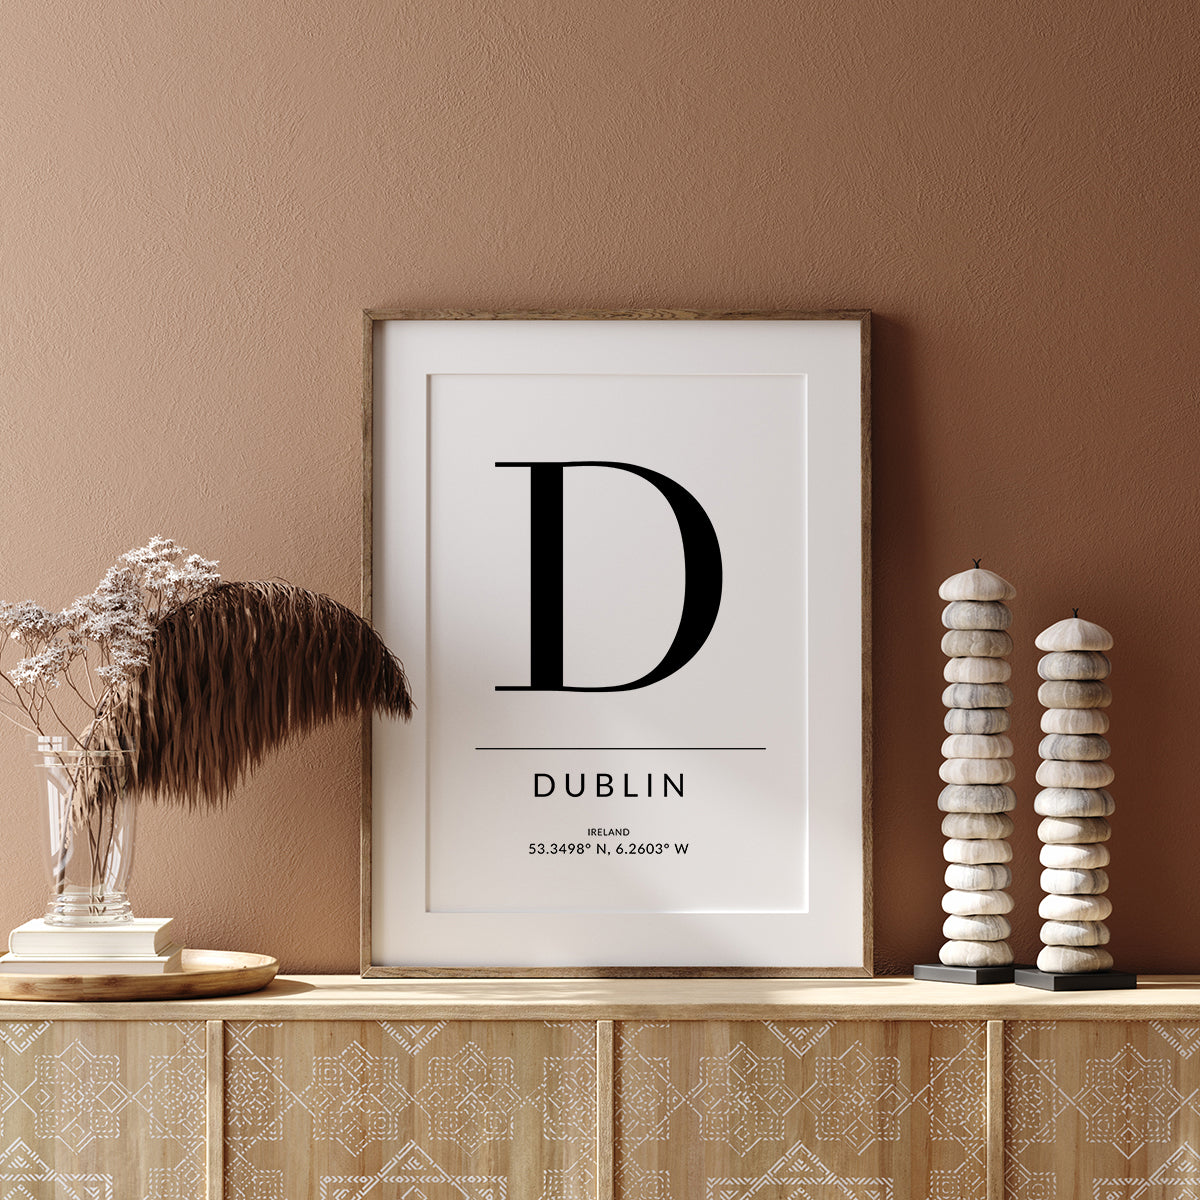 dublin ireland print gift, irish printable wall art